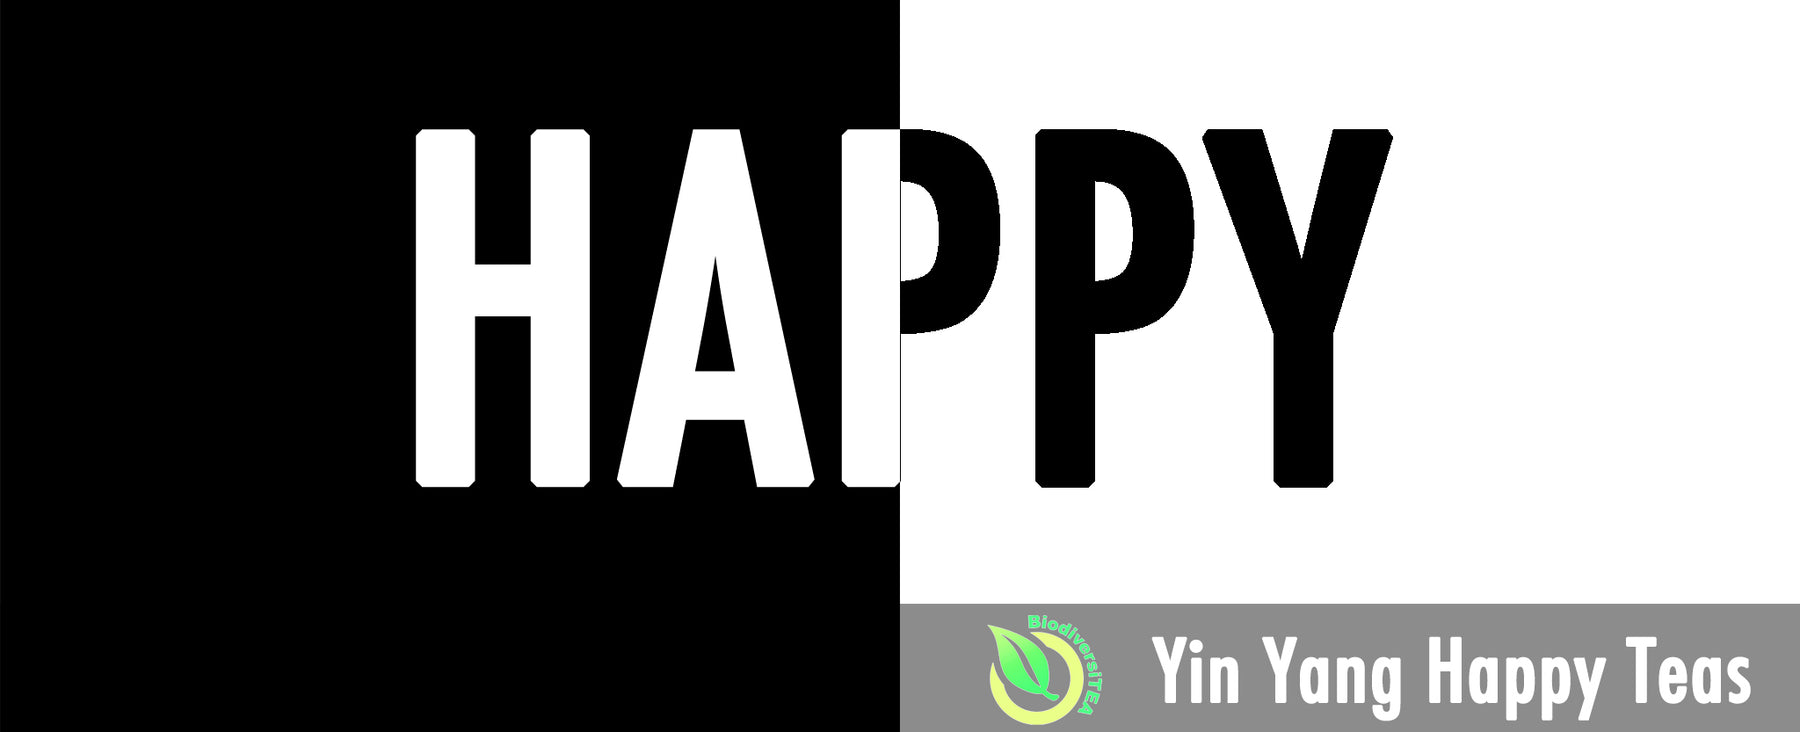 Yin Yang Happy Teas